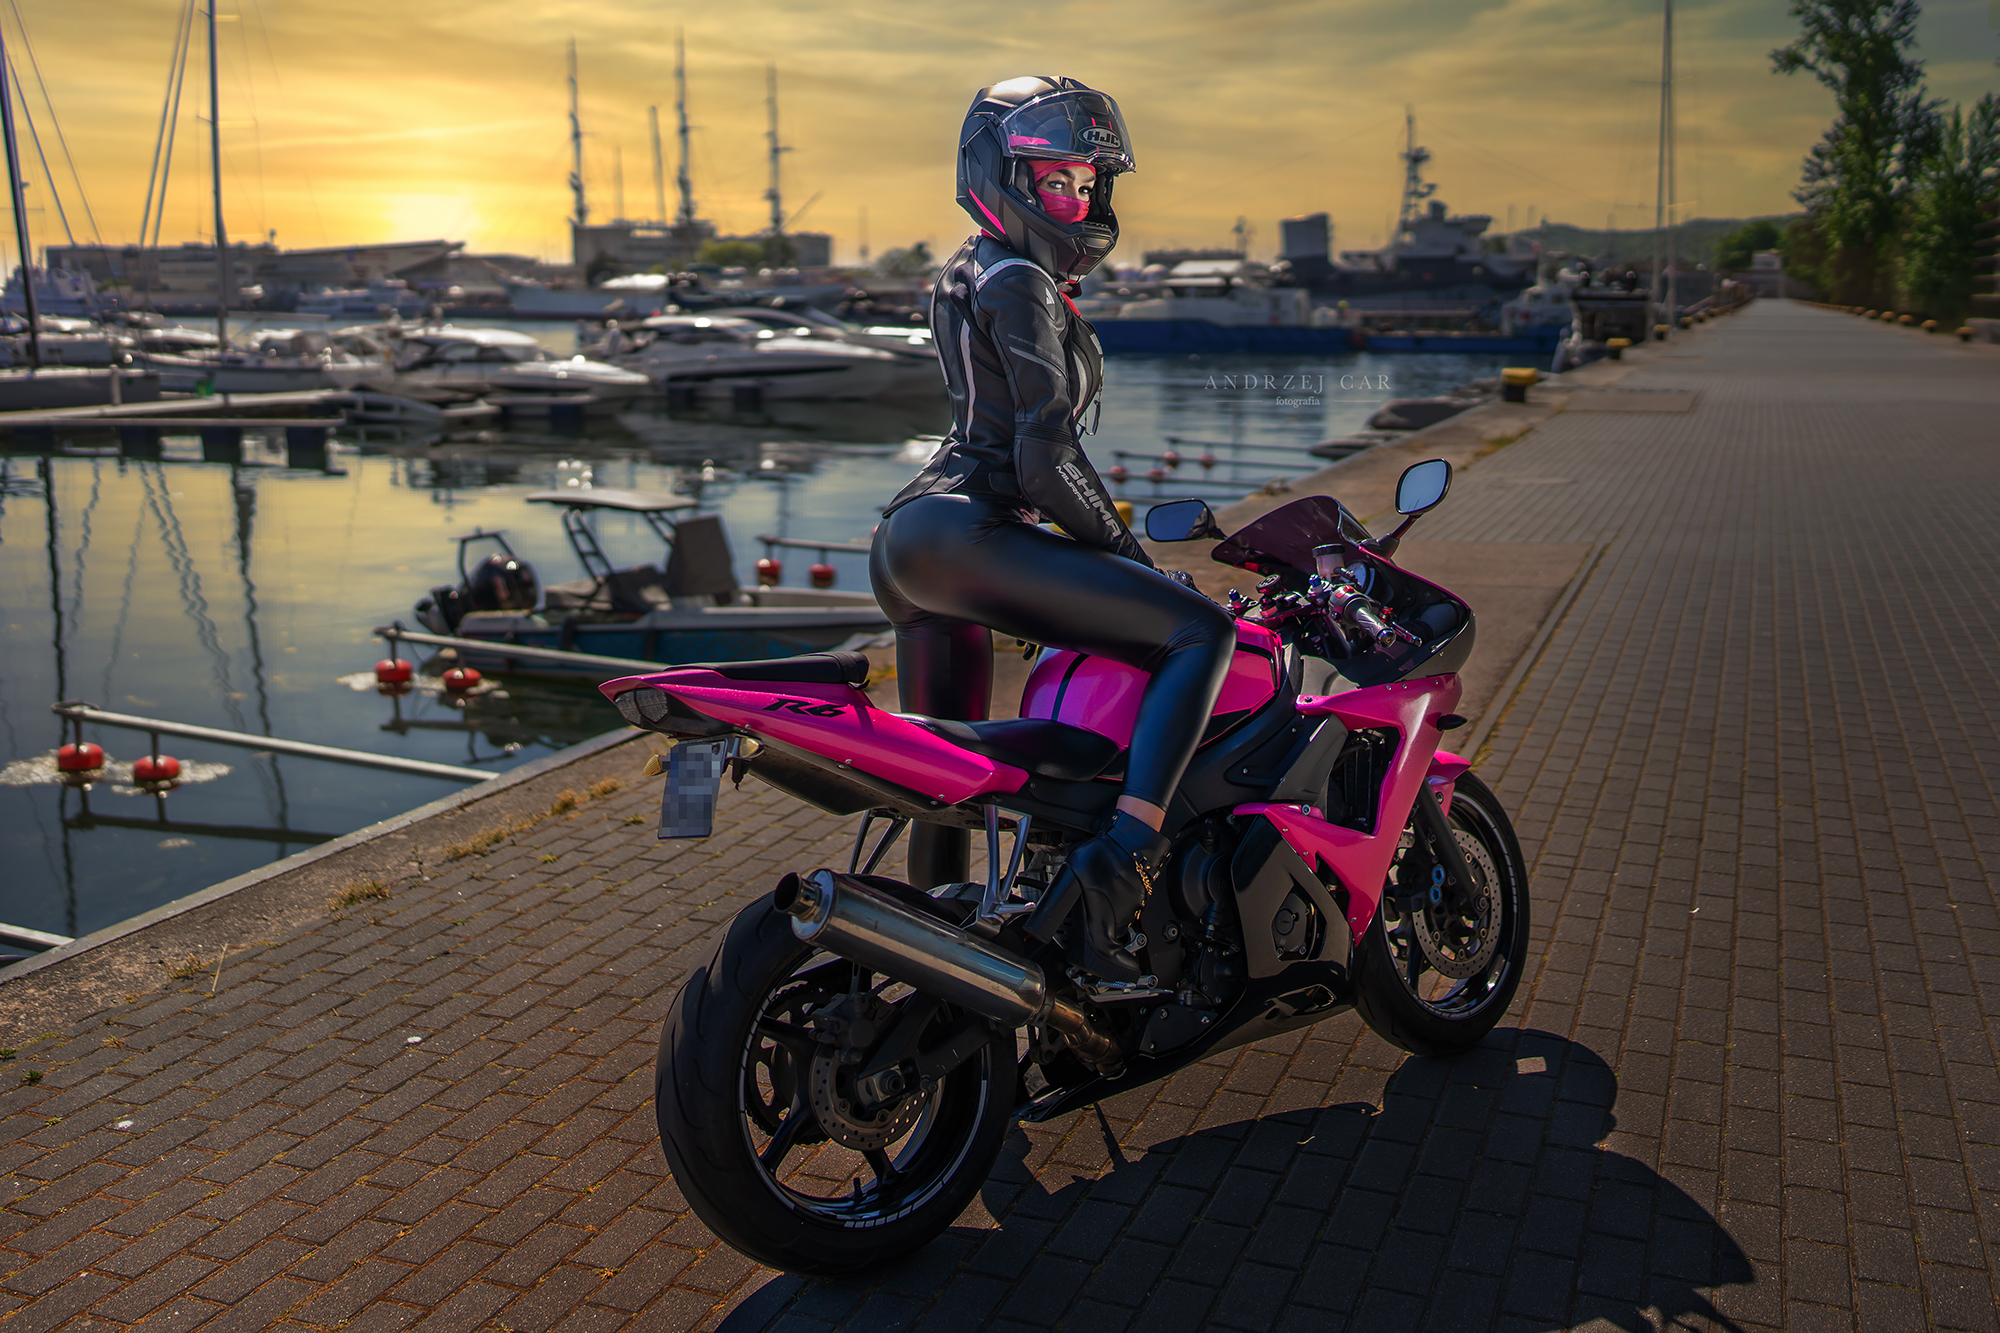 Andrzej Car Women Motorcycle Helmet Pink Dock Women With Motorcycles 2000x1333